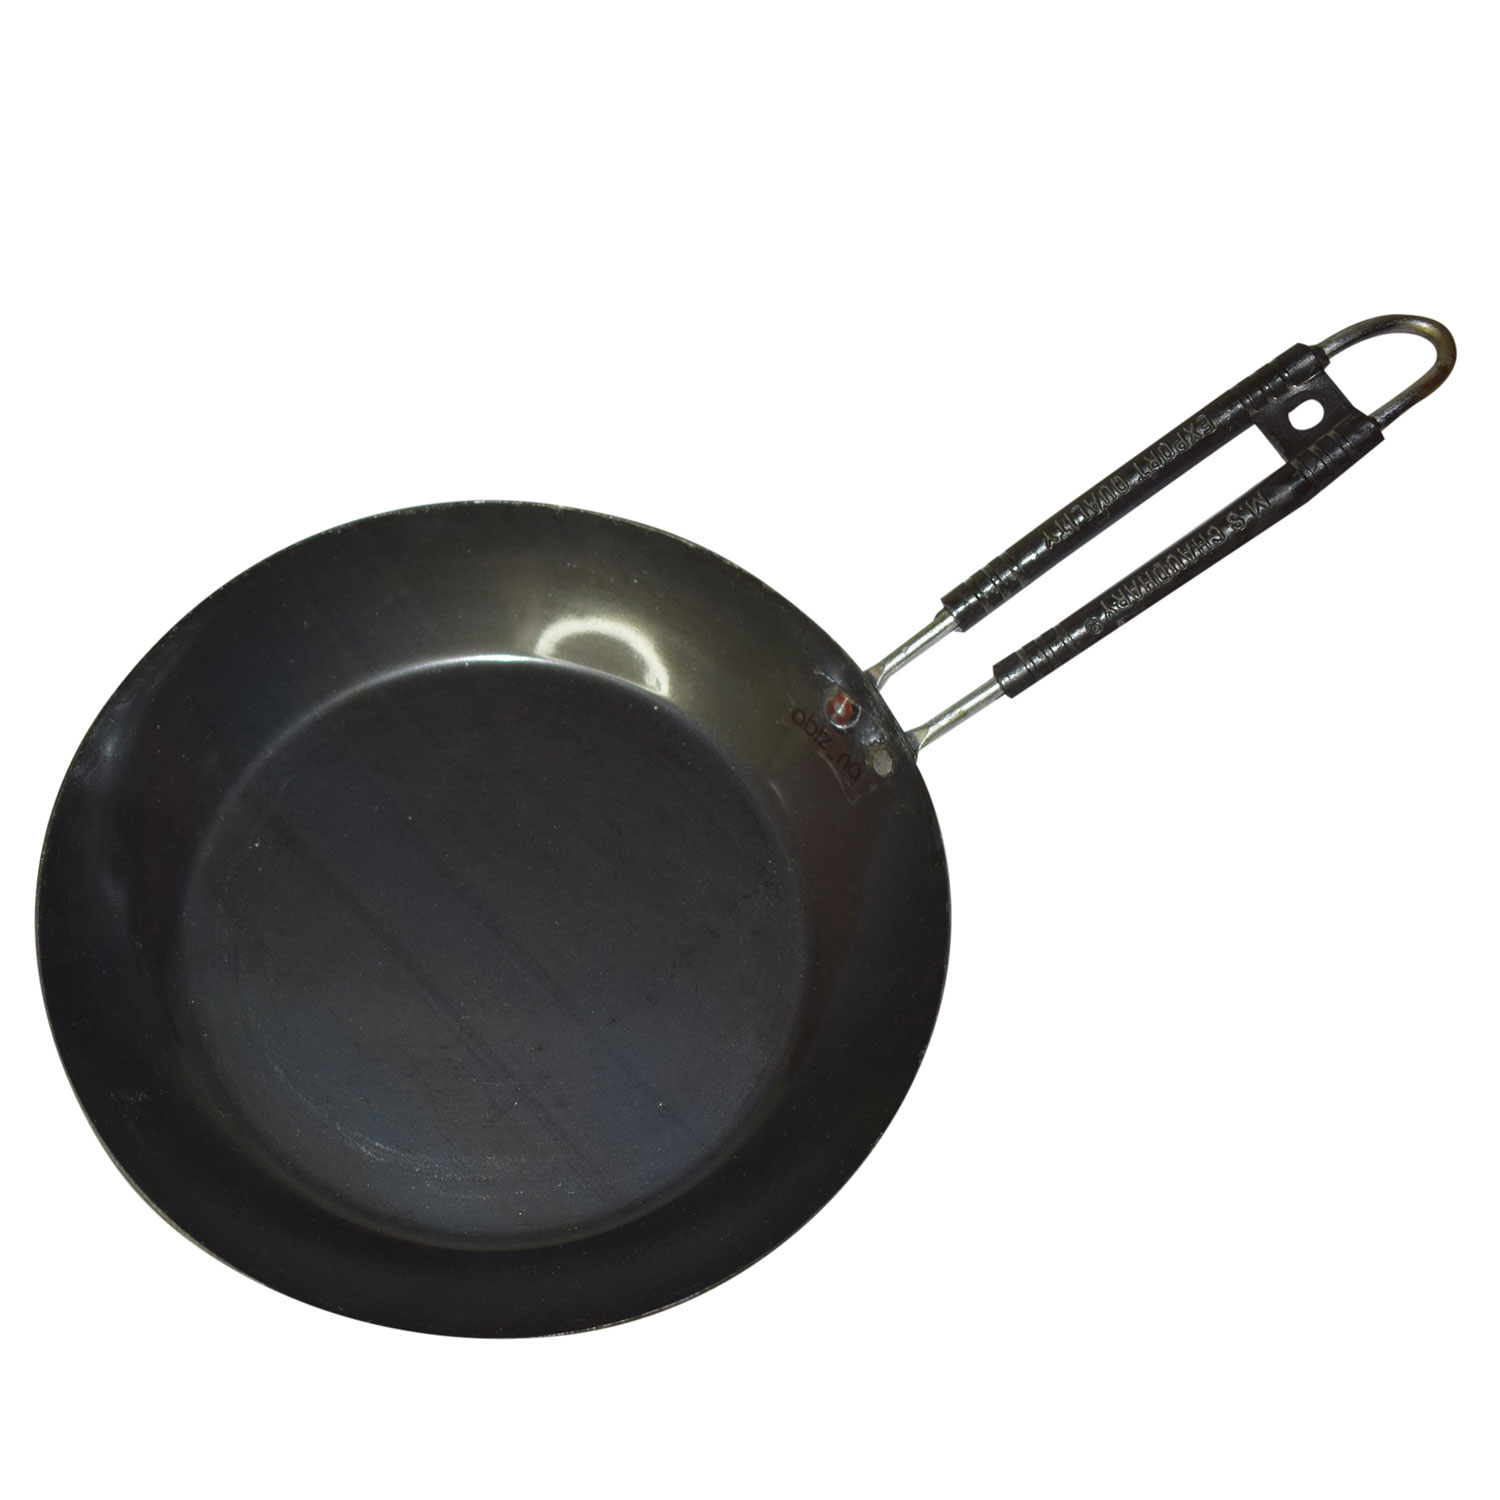 Pre-Seasoned Induction Friendly Non-Stick Iron Frying Pan Frypan